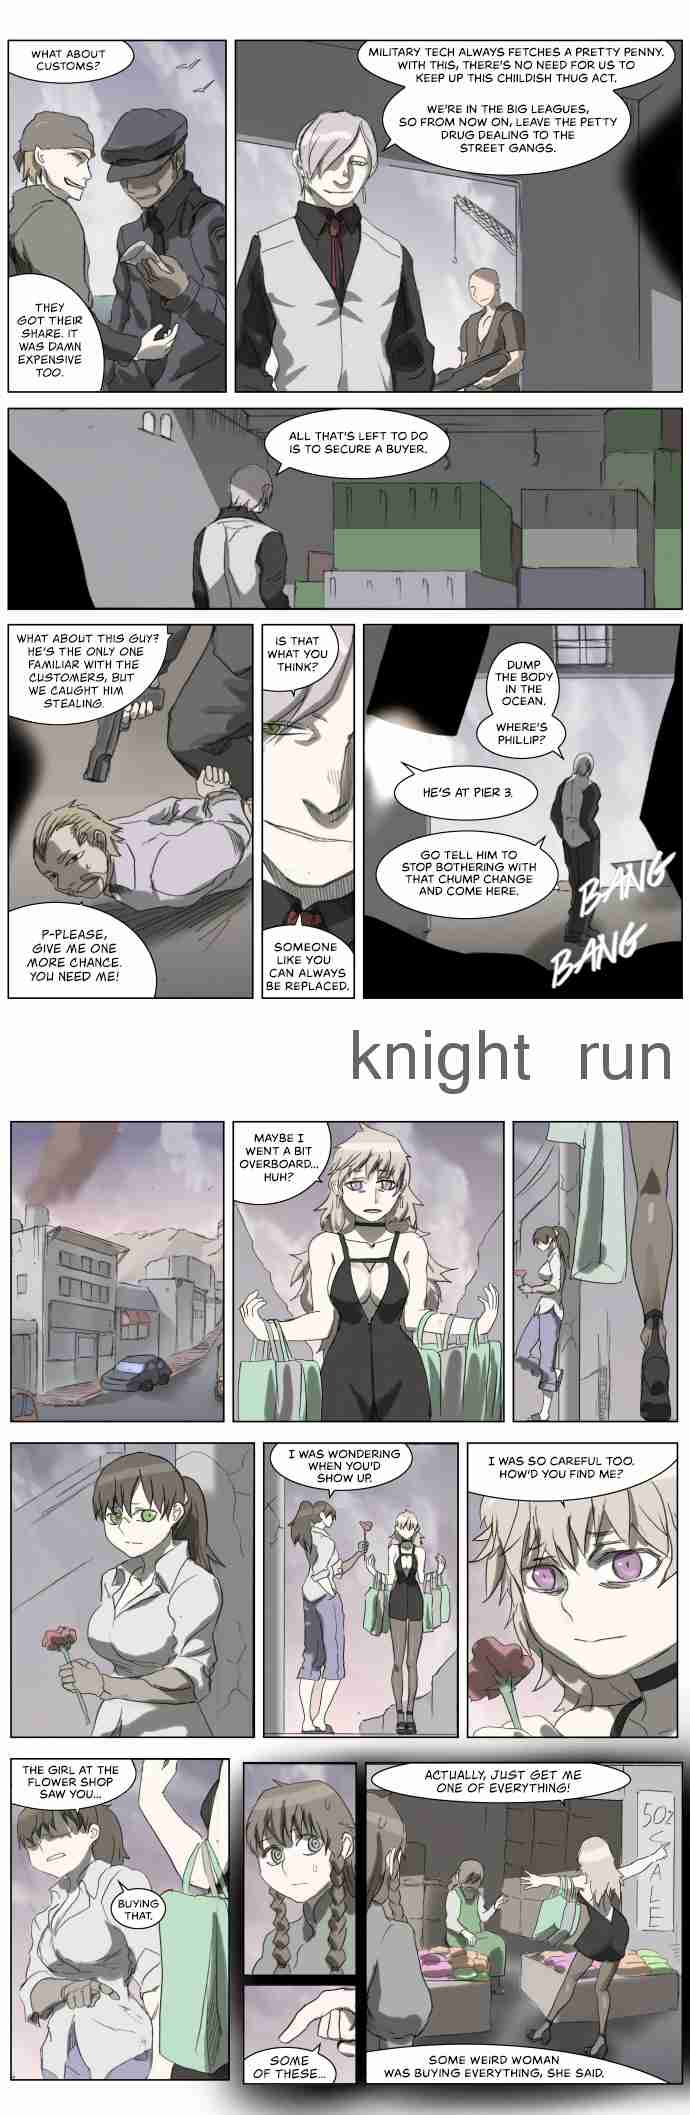 Knight Run Vol. 3 Ch. 177 Hero Part 8 | Crumbling